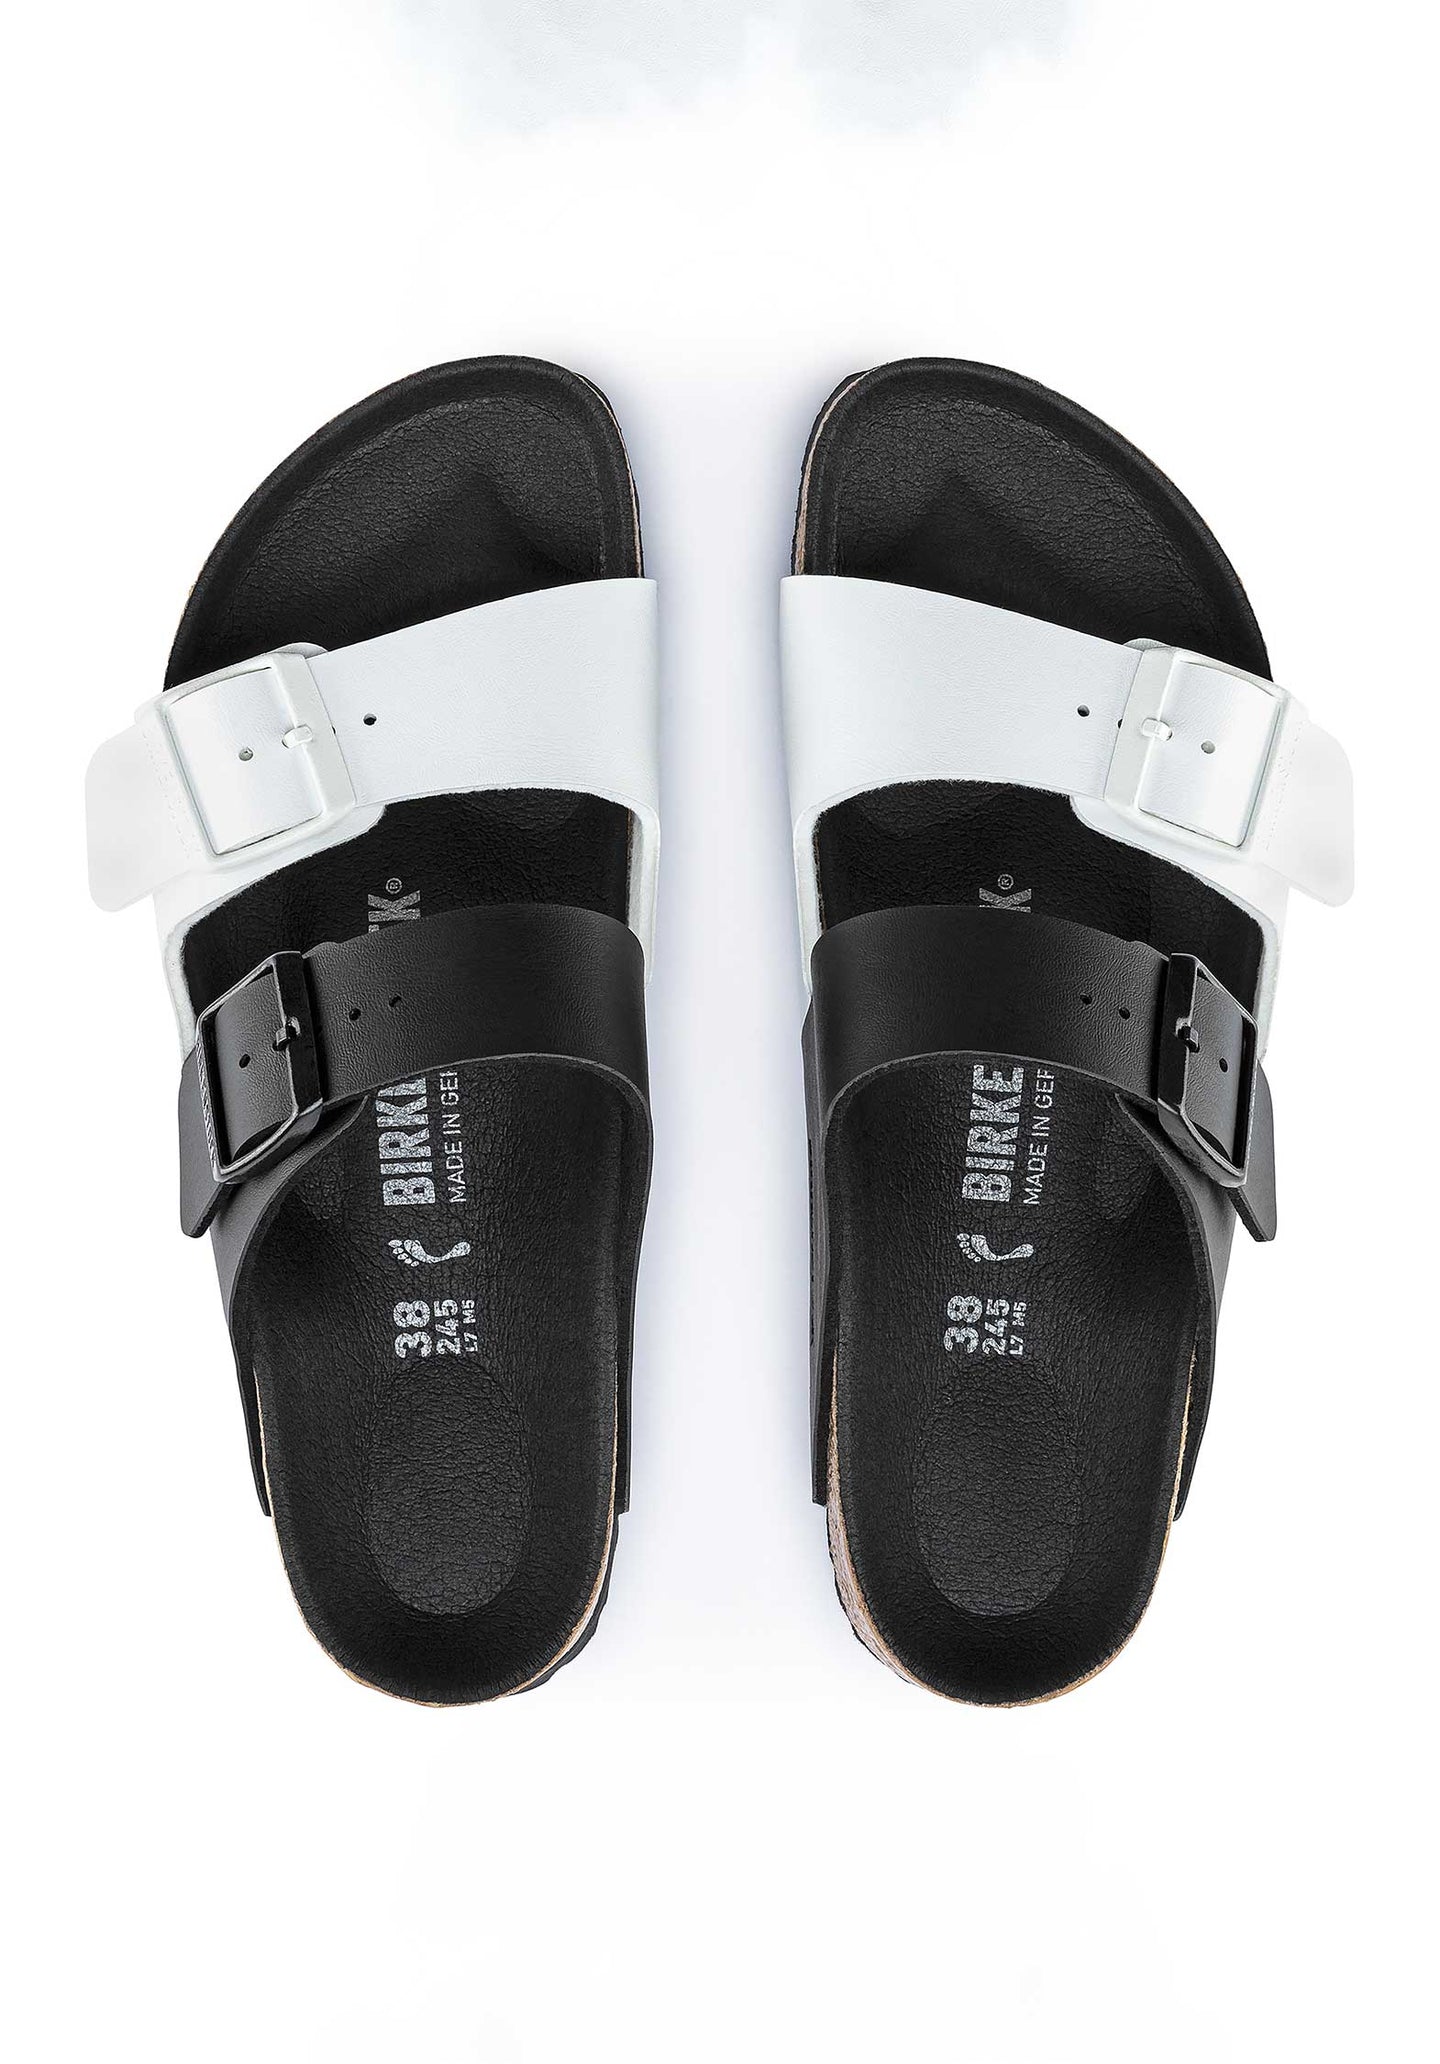 Shoes Arizona Spli Arizona Split Black-White